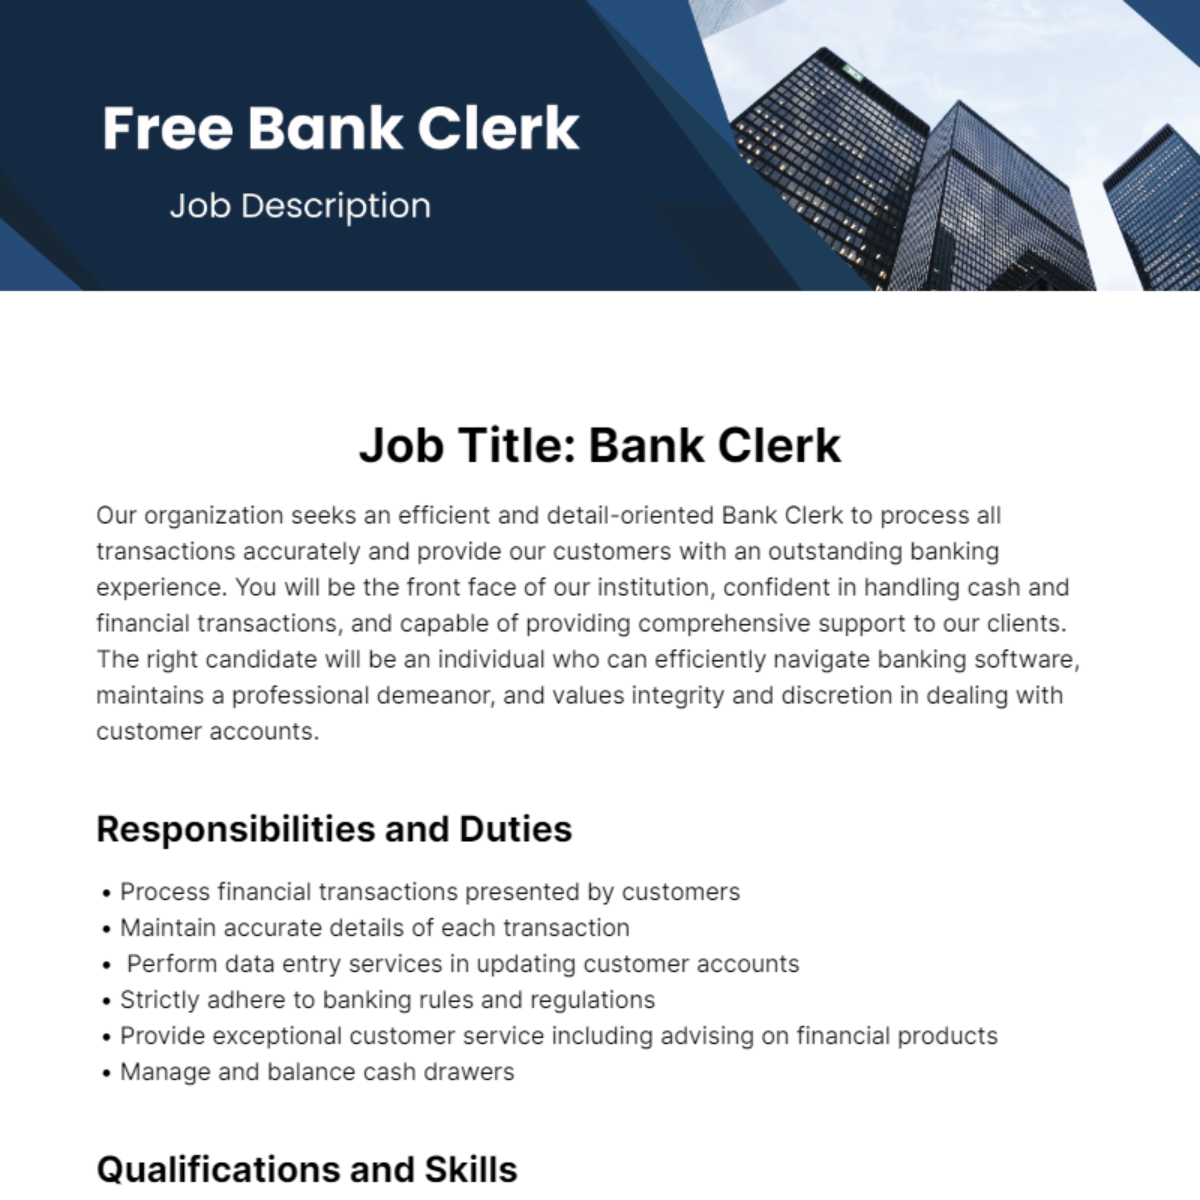 Free Bank Clerk Job Description Template